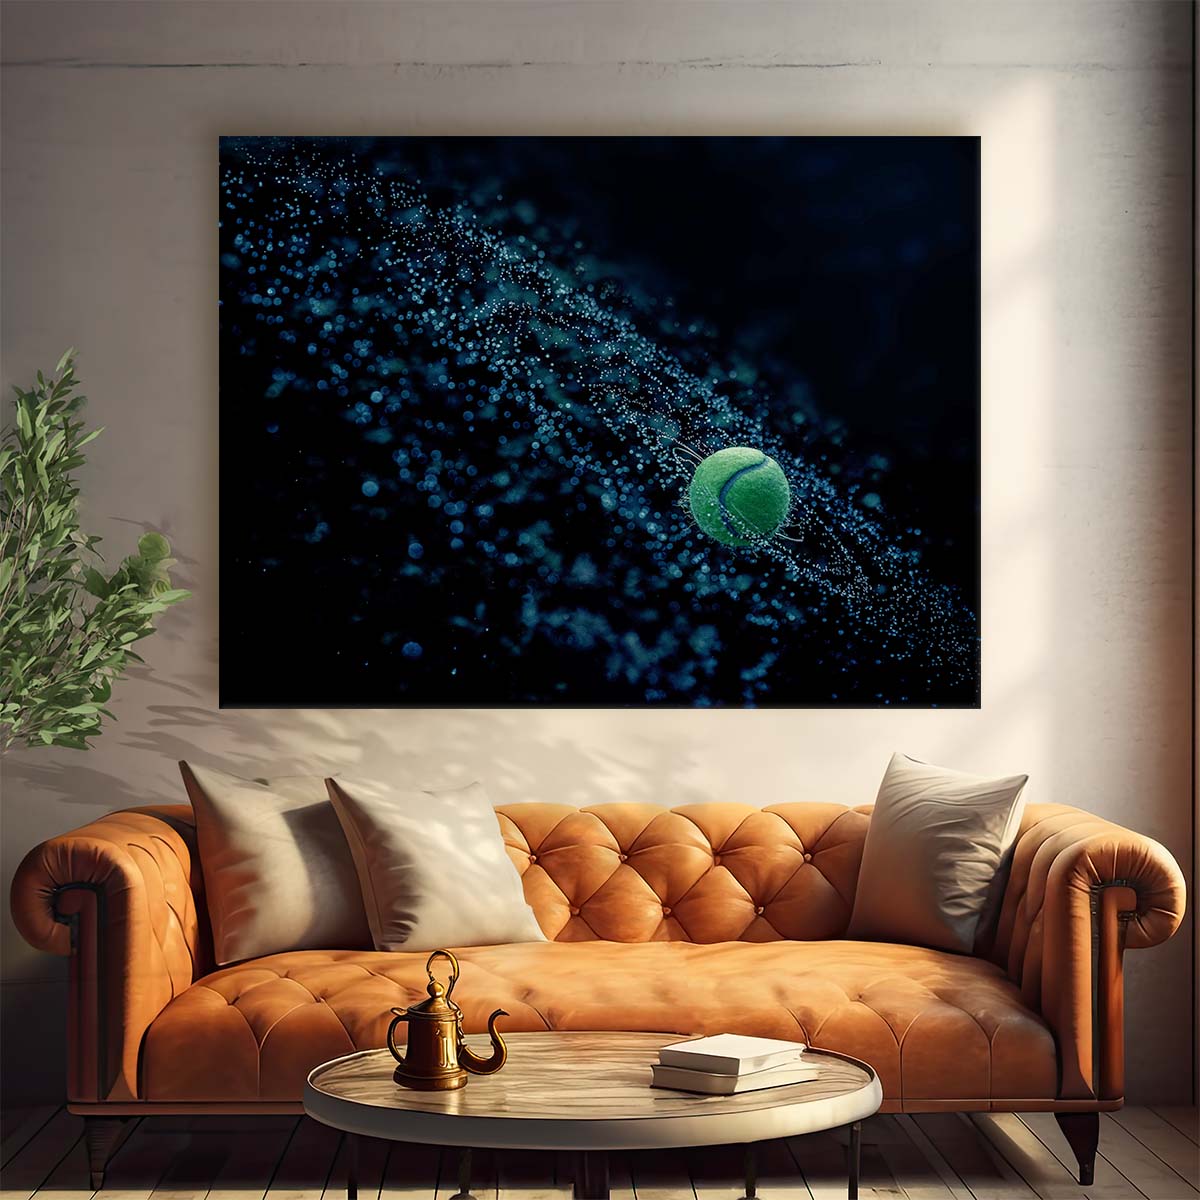 Cosmic Tennis Ball Splash Galaxy Universe Wall Art by Luxuriance Designs. Made in USA.